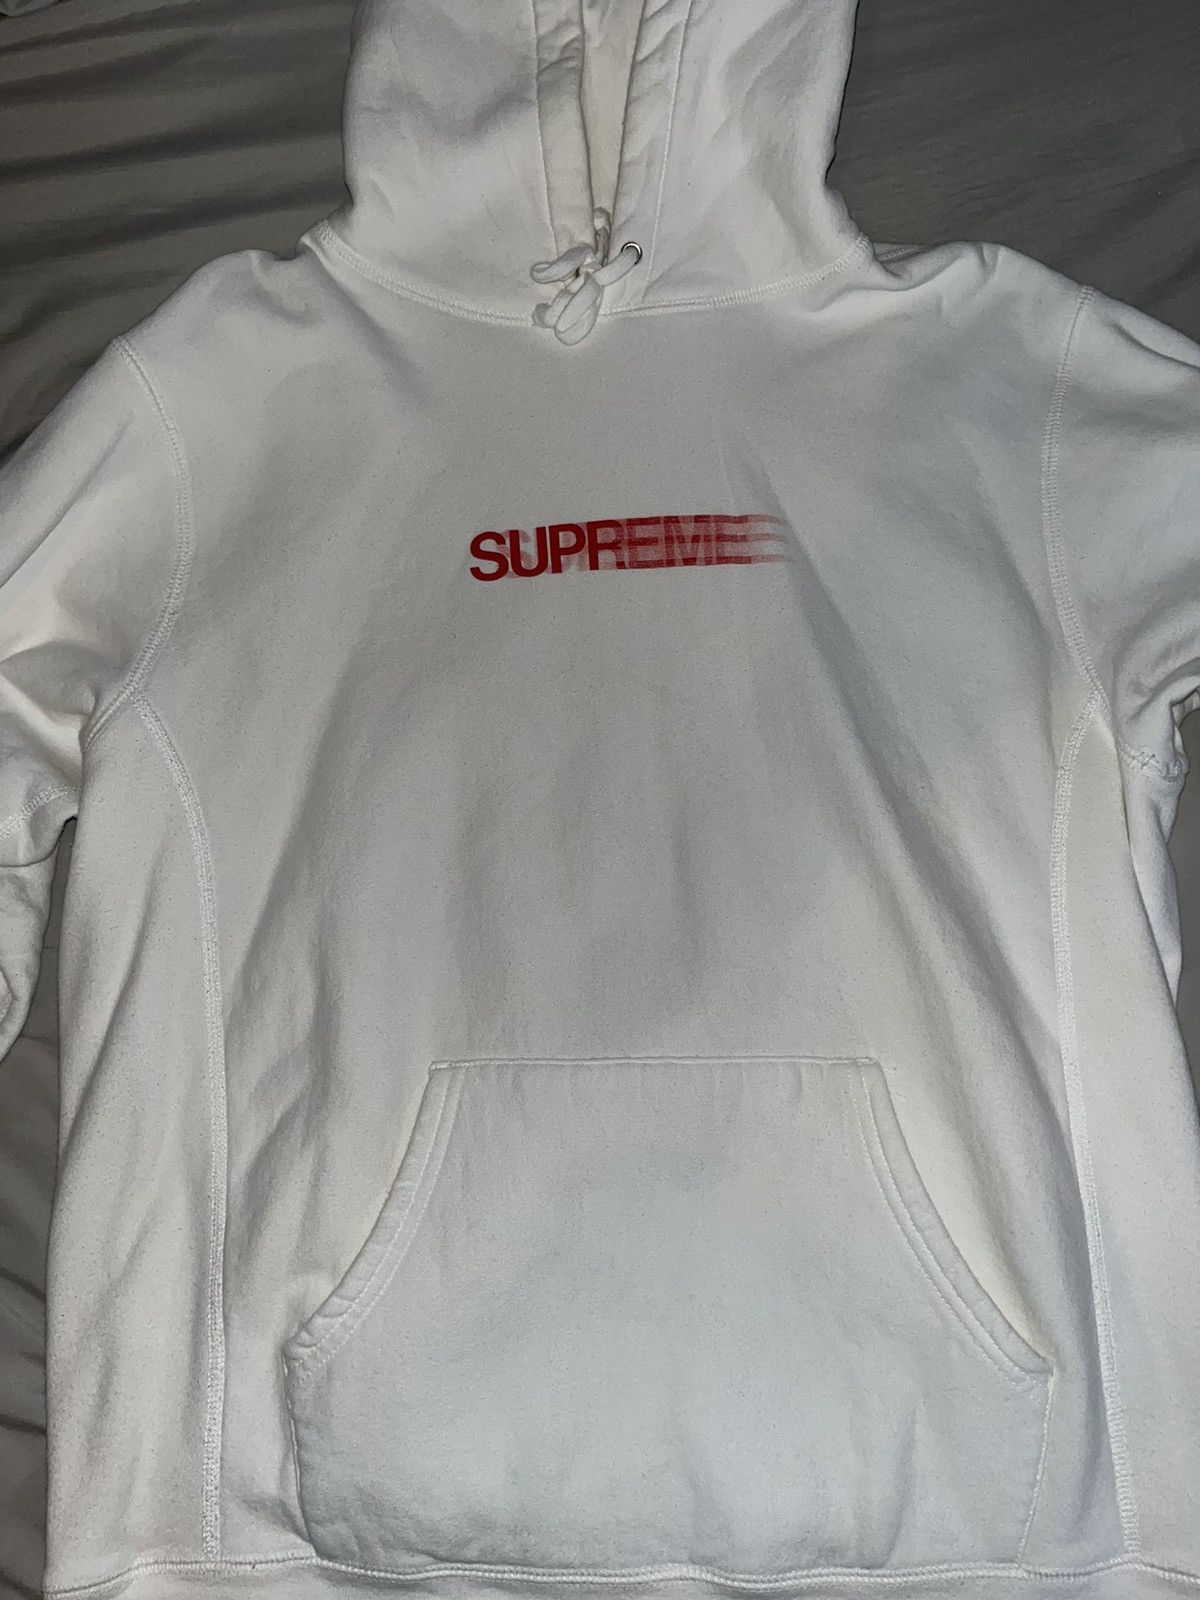 Supreme Supreme motion logo (2020) Hooded sweatshirt white large